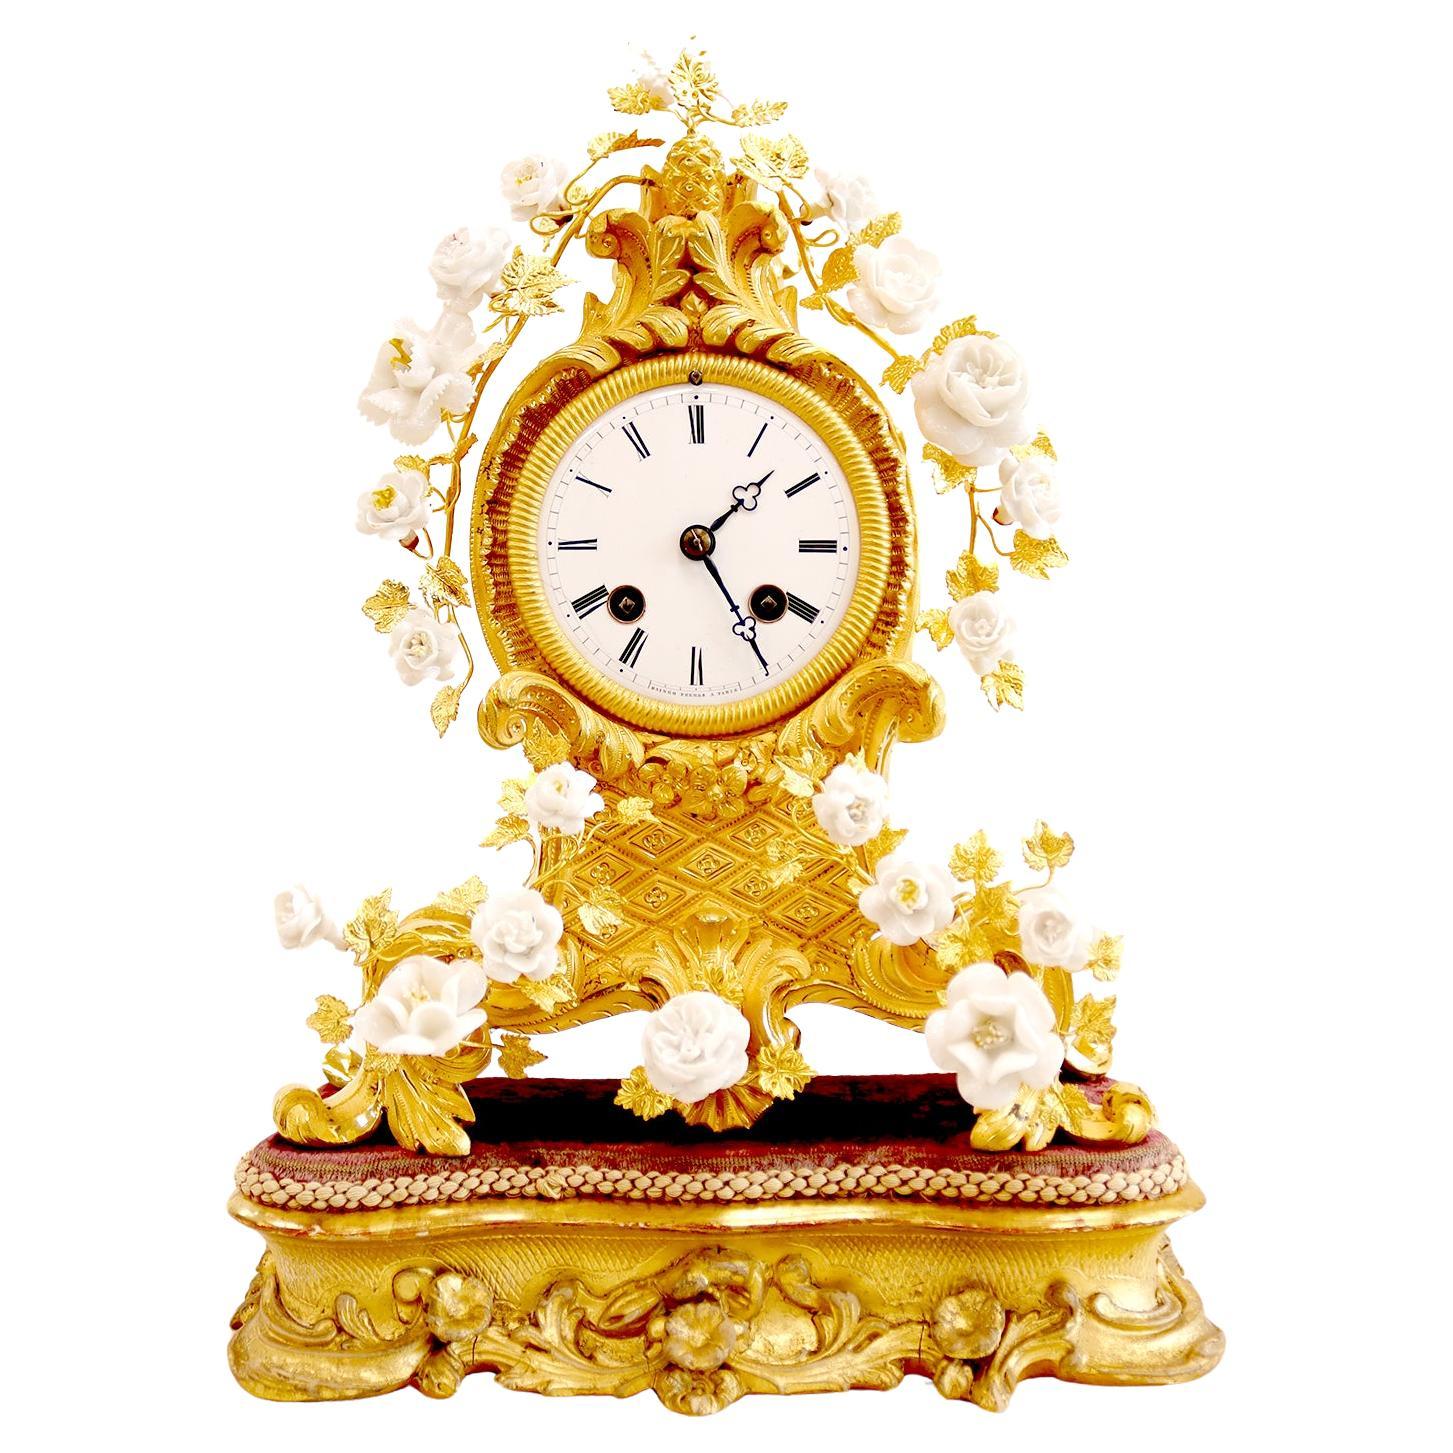 Ormolu Mantel Clock By Raingo Freres, Paris